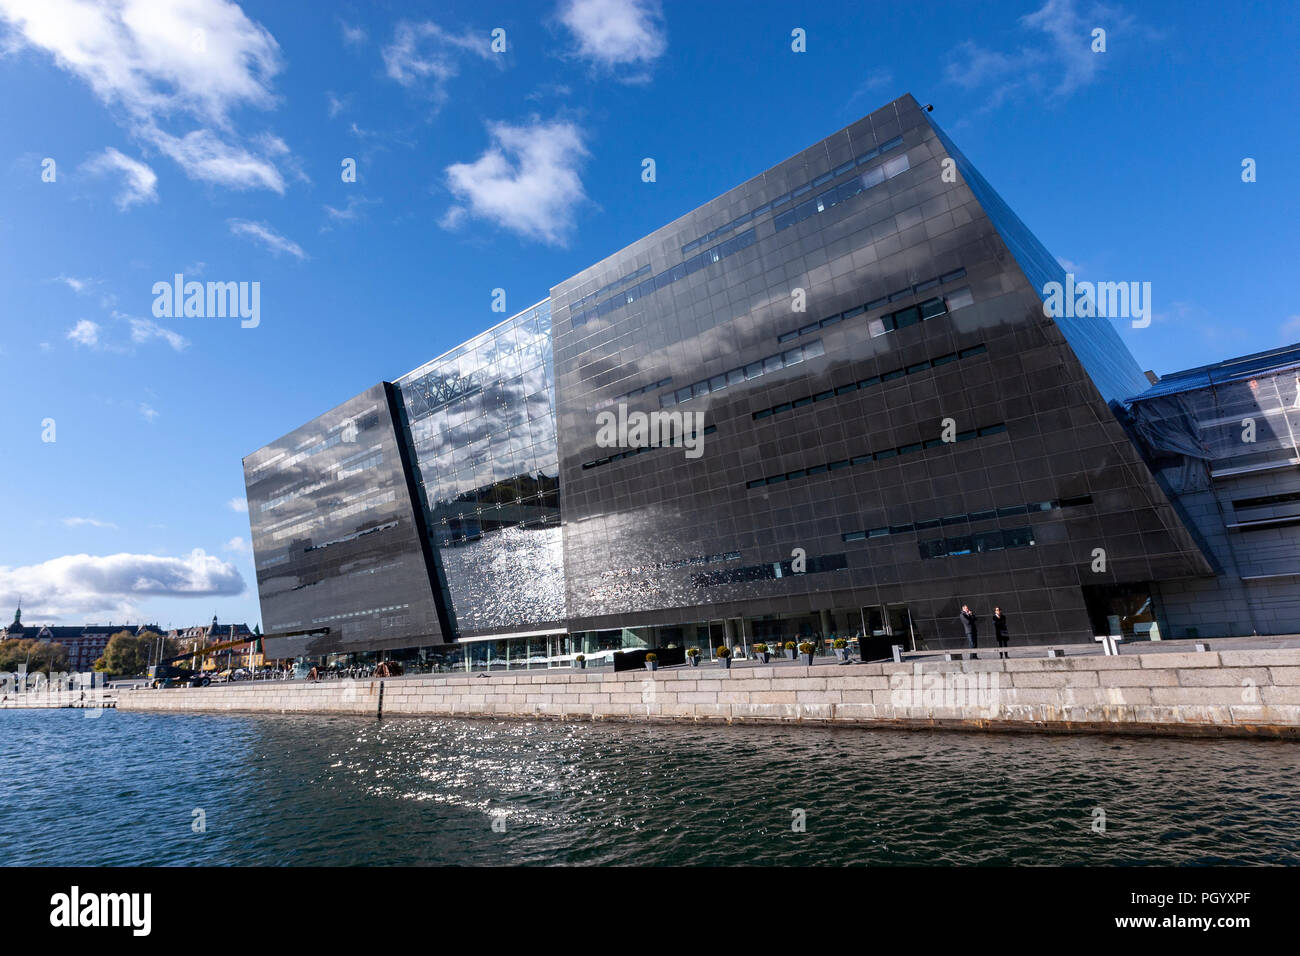 Reflection in the facade of the Royal Danish Library, The Black Diamond library, Designed by architects Schmidt Hammer Lassen, Copenhagen, Denmark. Stock Photo